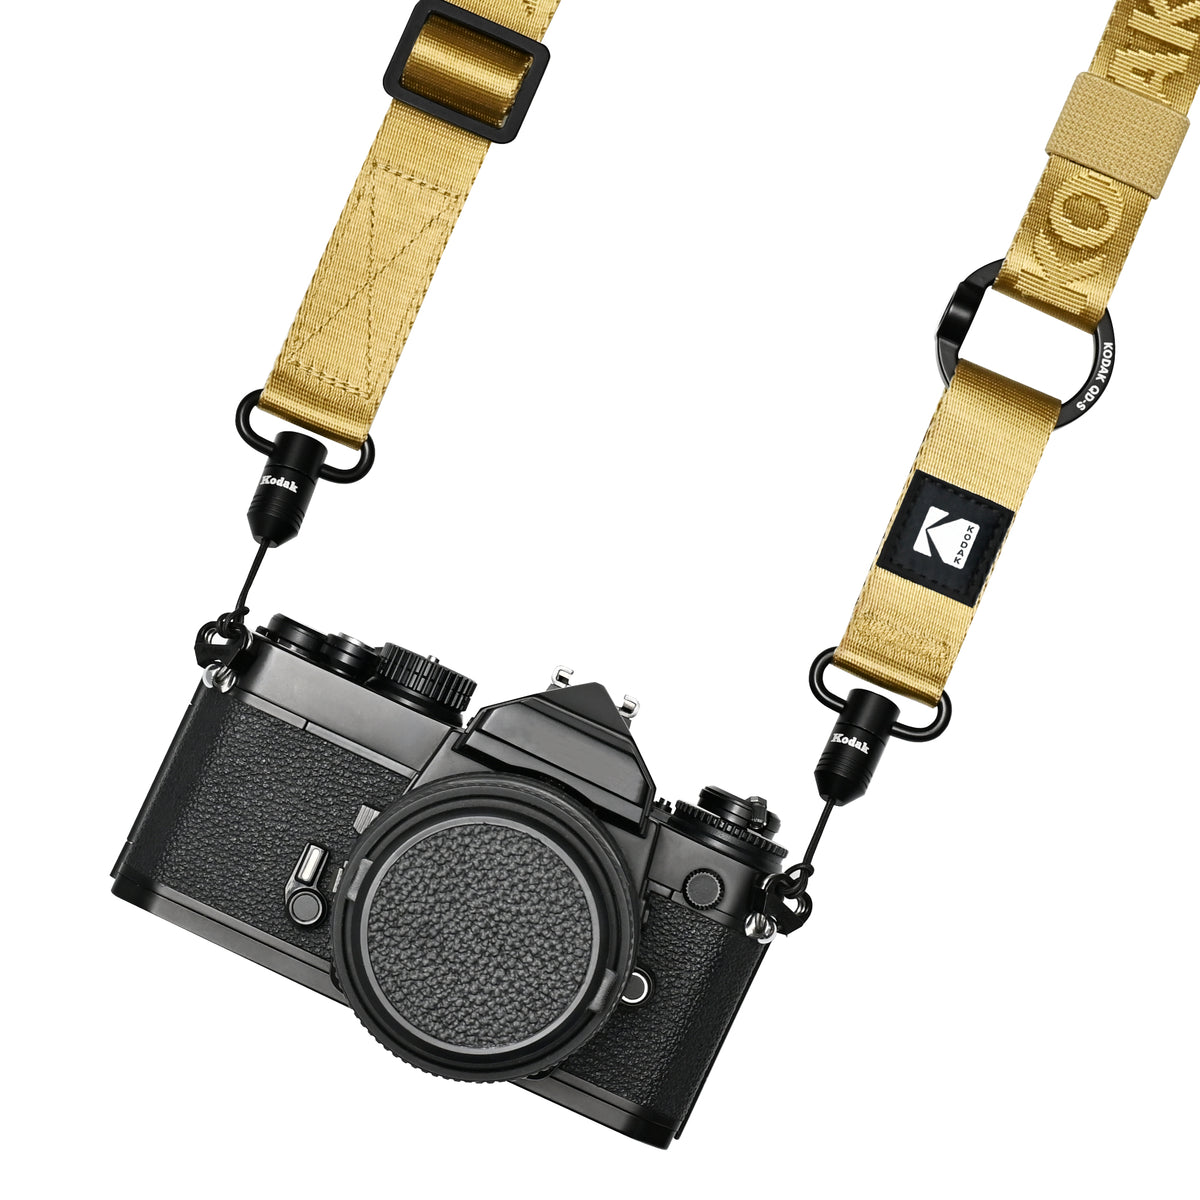 Kodak Camera Strap Promises Vintage Style and Versatile Design